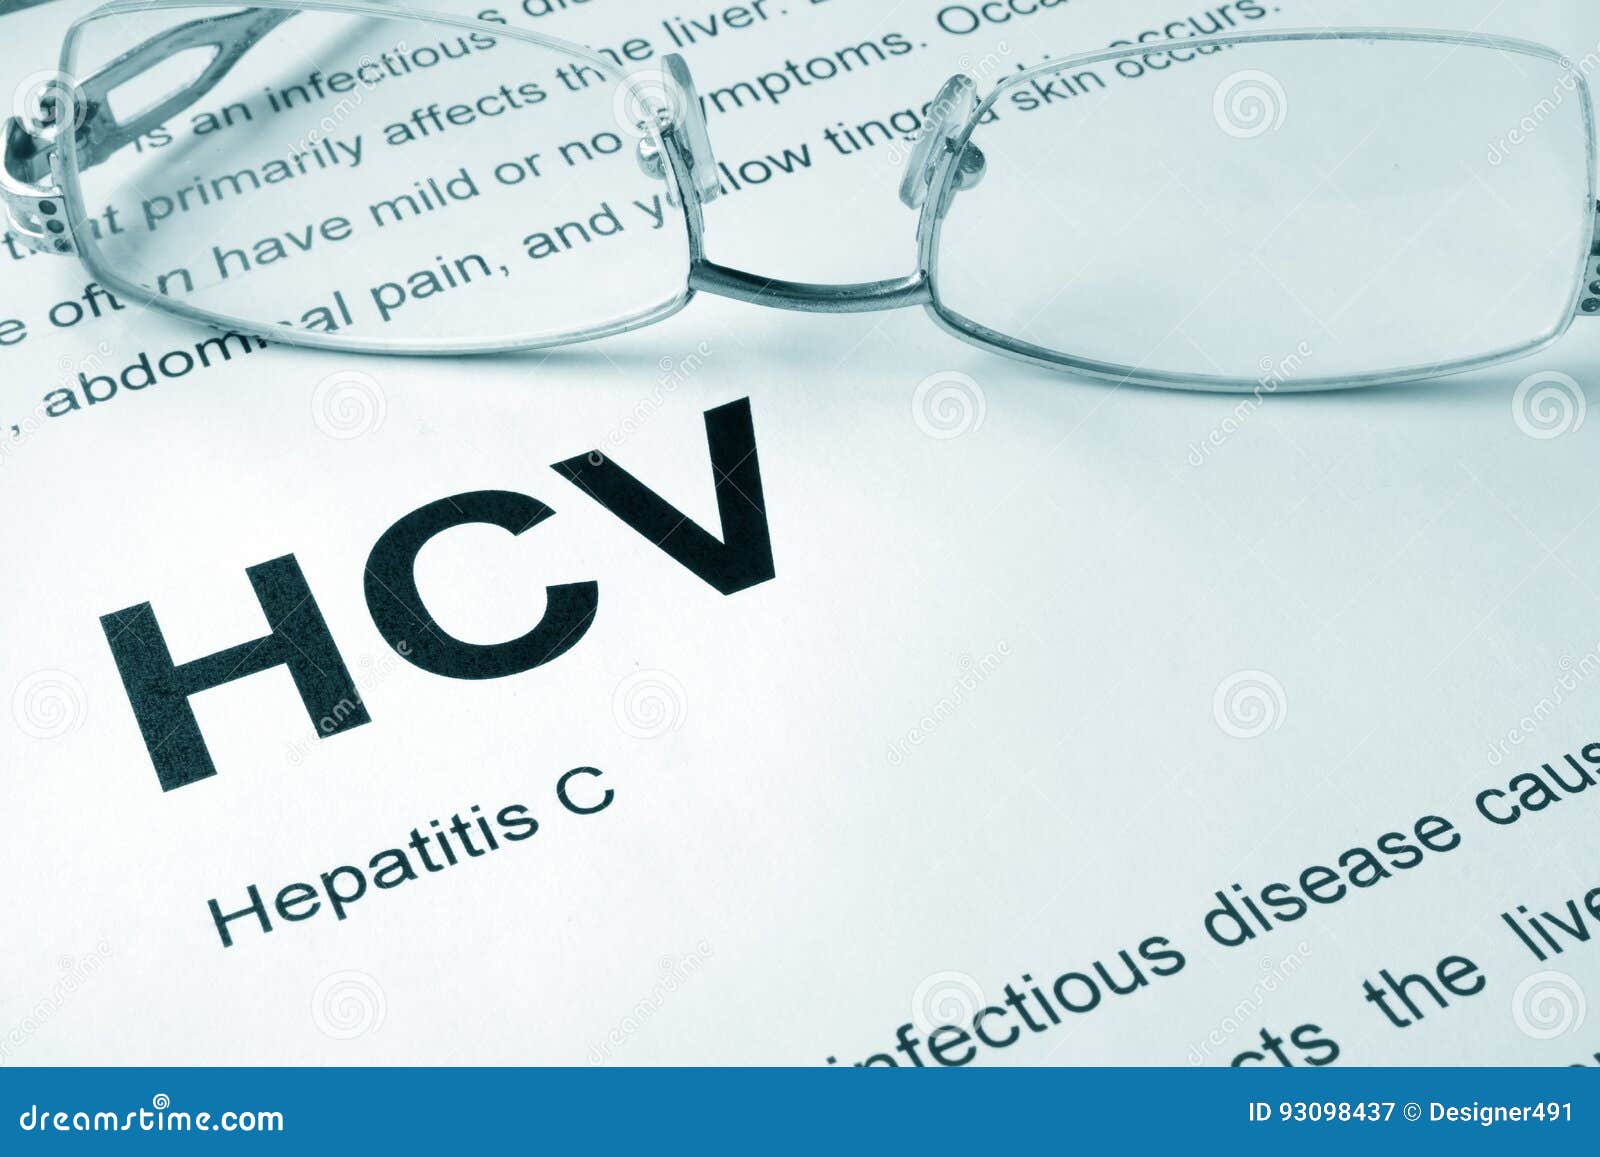 hcv written on a page. hepatitis c.